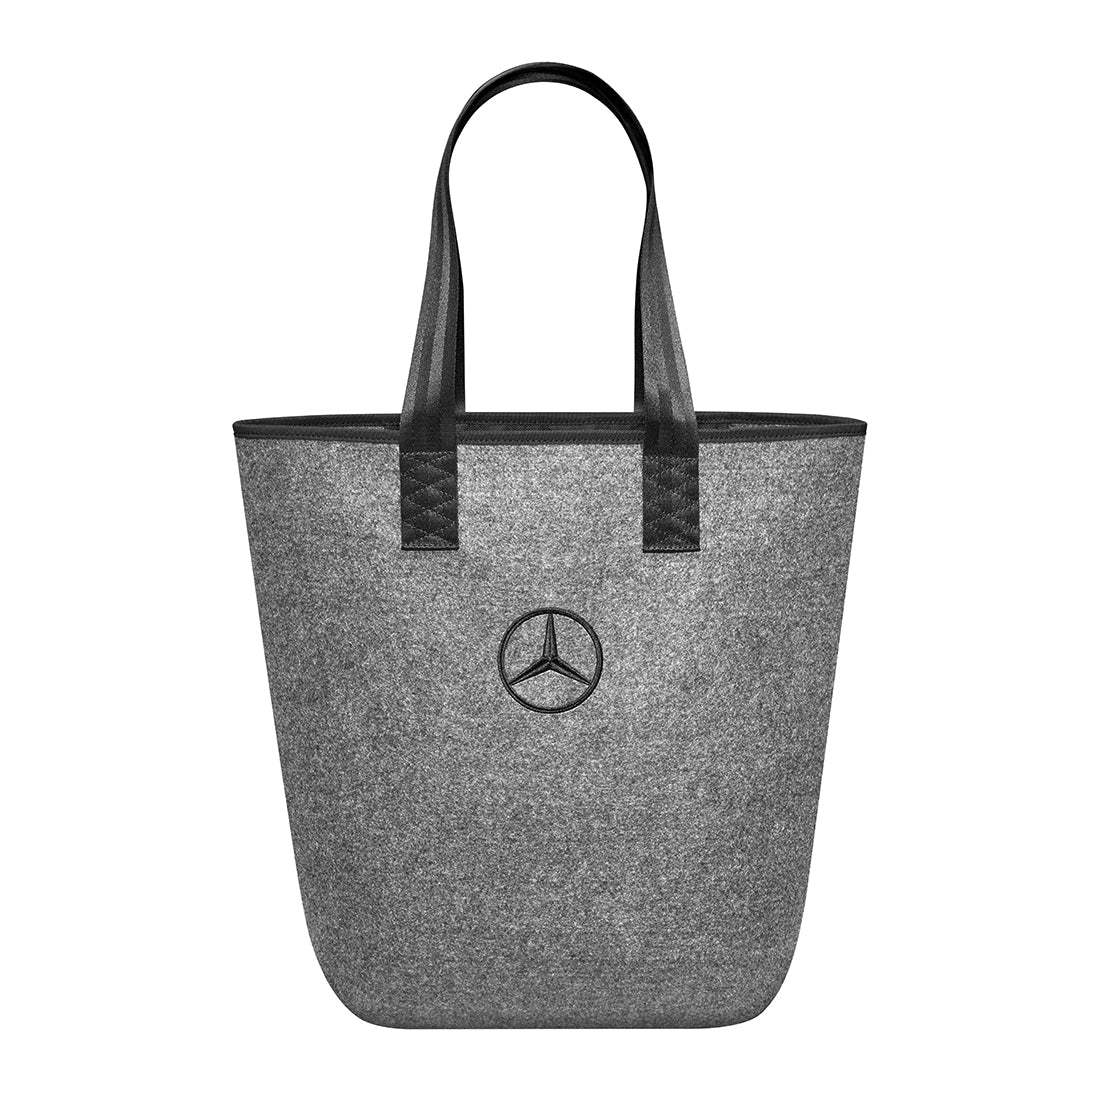 Buy Mercedes-Benz E 63 AMG Beach Tote Bag #1092403 at